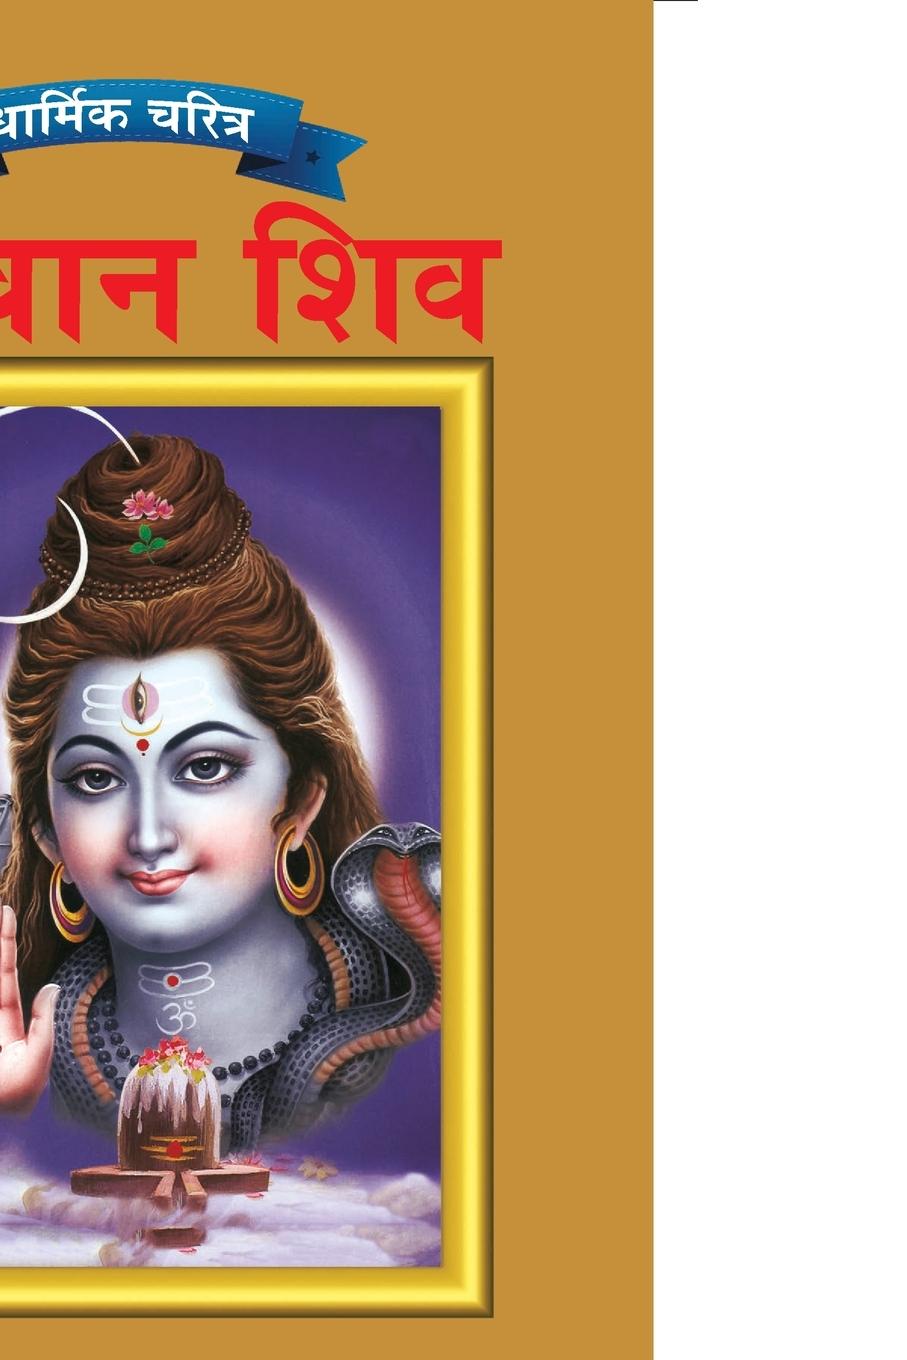 Carte Lord Shiva in Marathi 